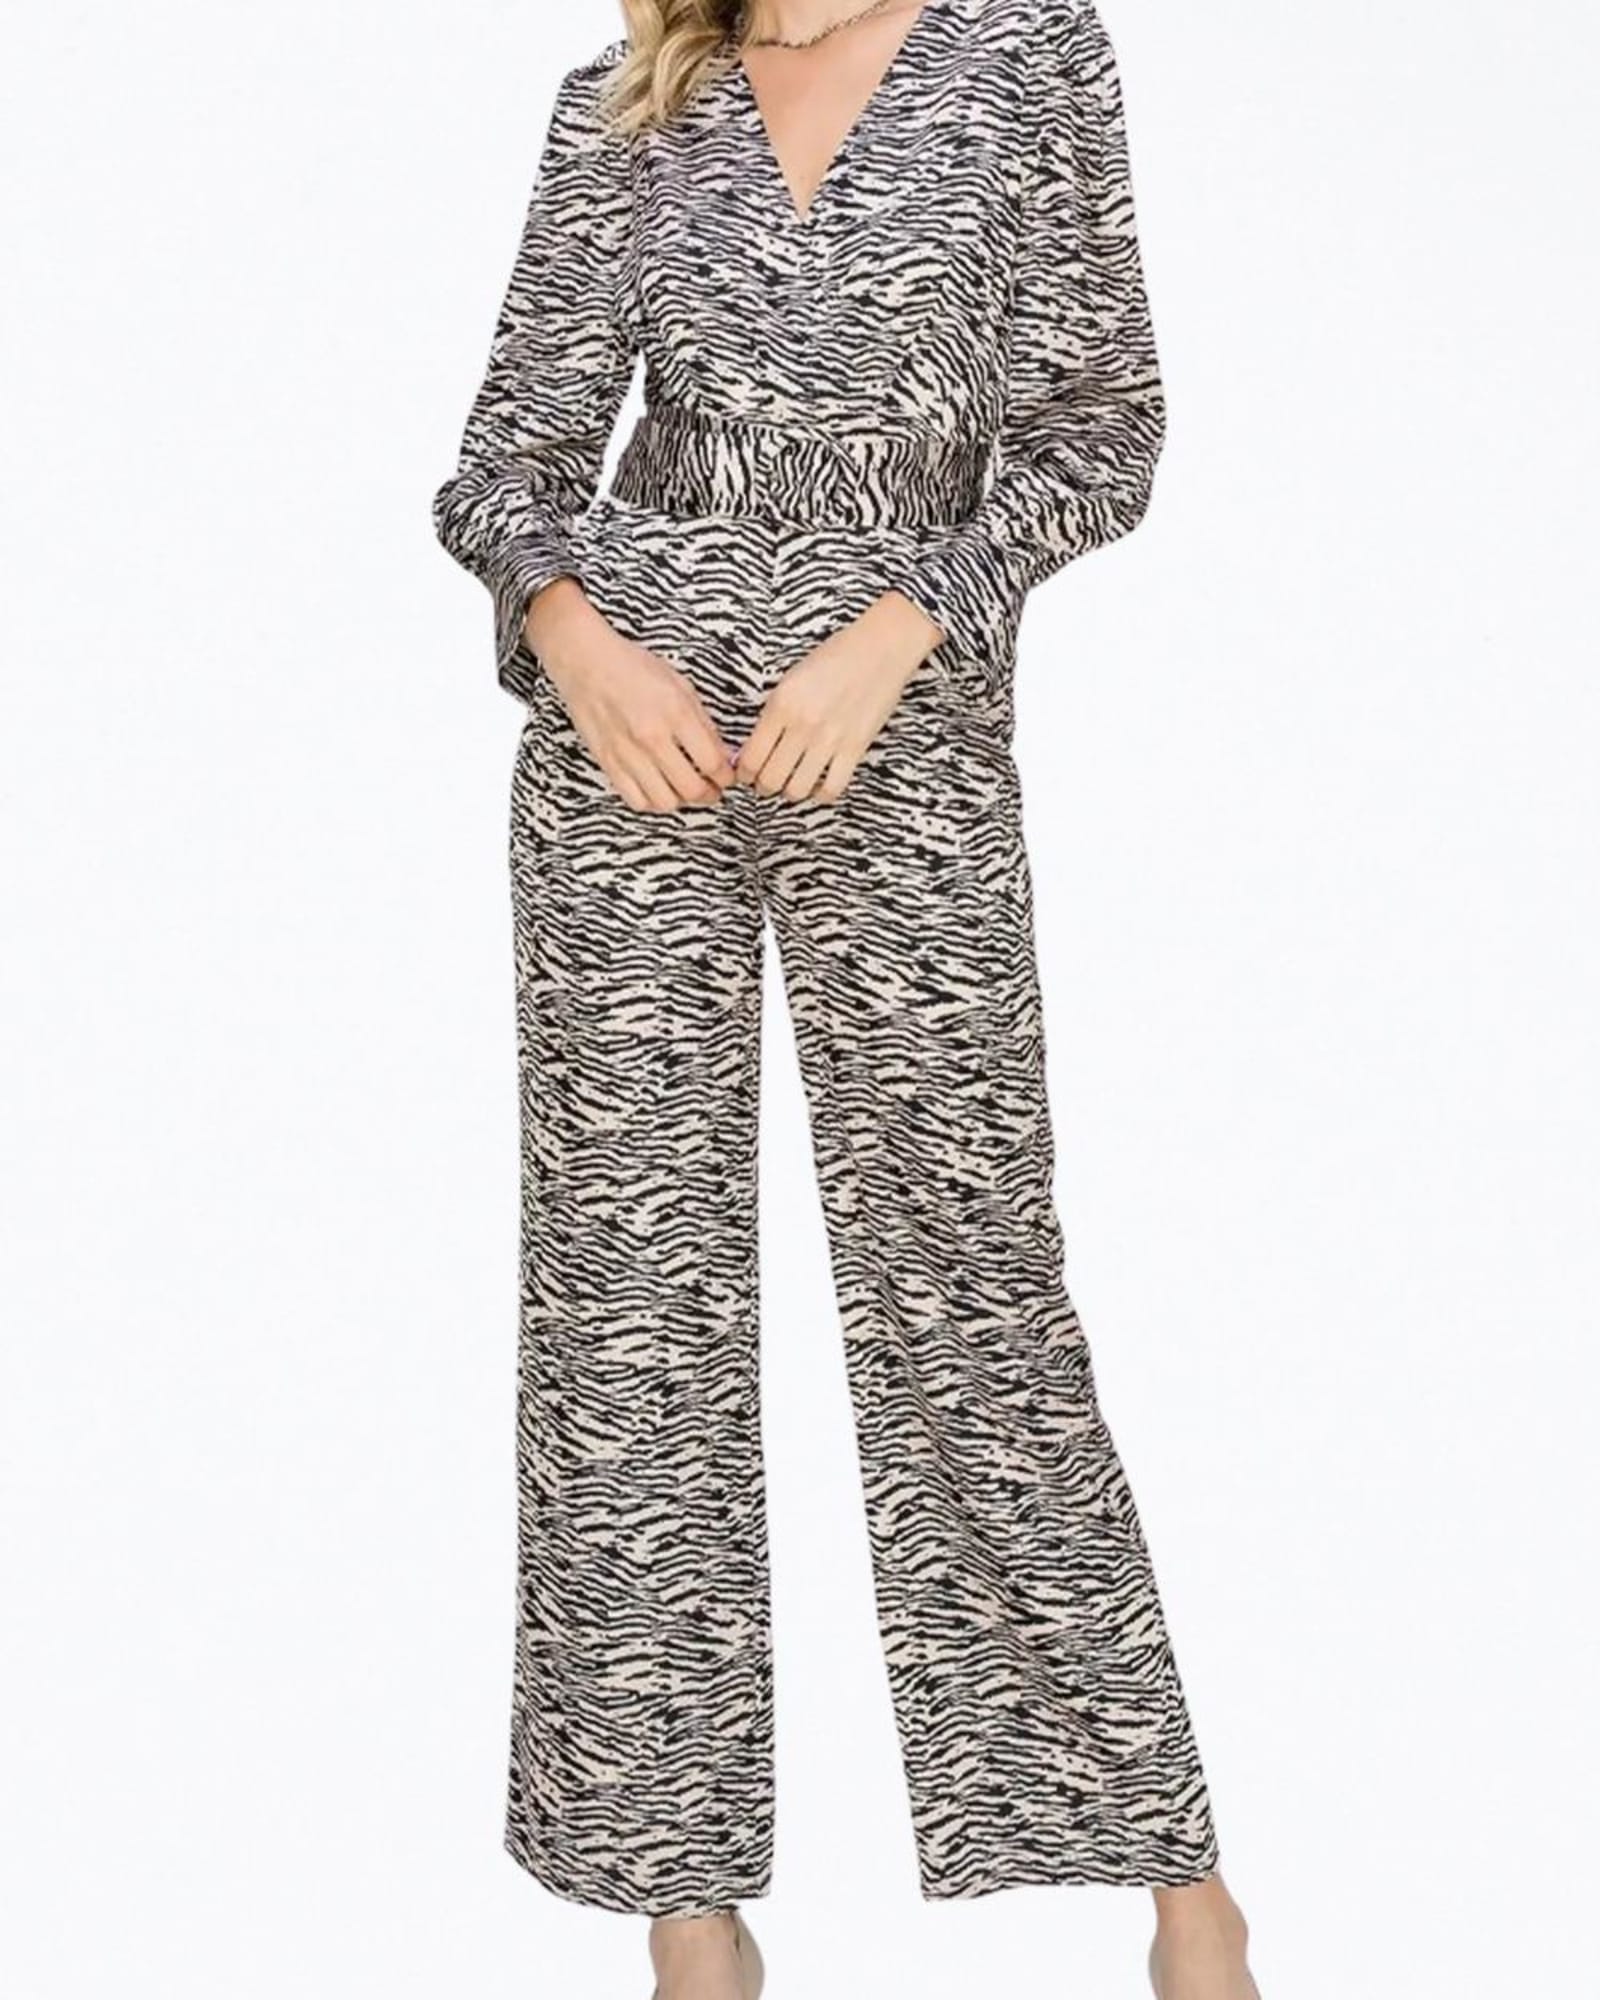 Toni Zebra-Print Belted Wrap-Effect Sateen Jumpsuit in Tan/Black | Tan/Black